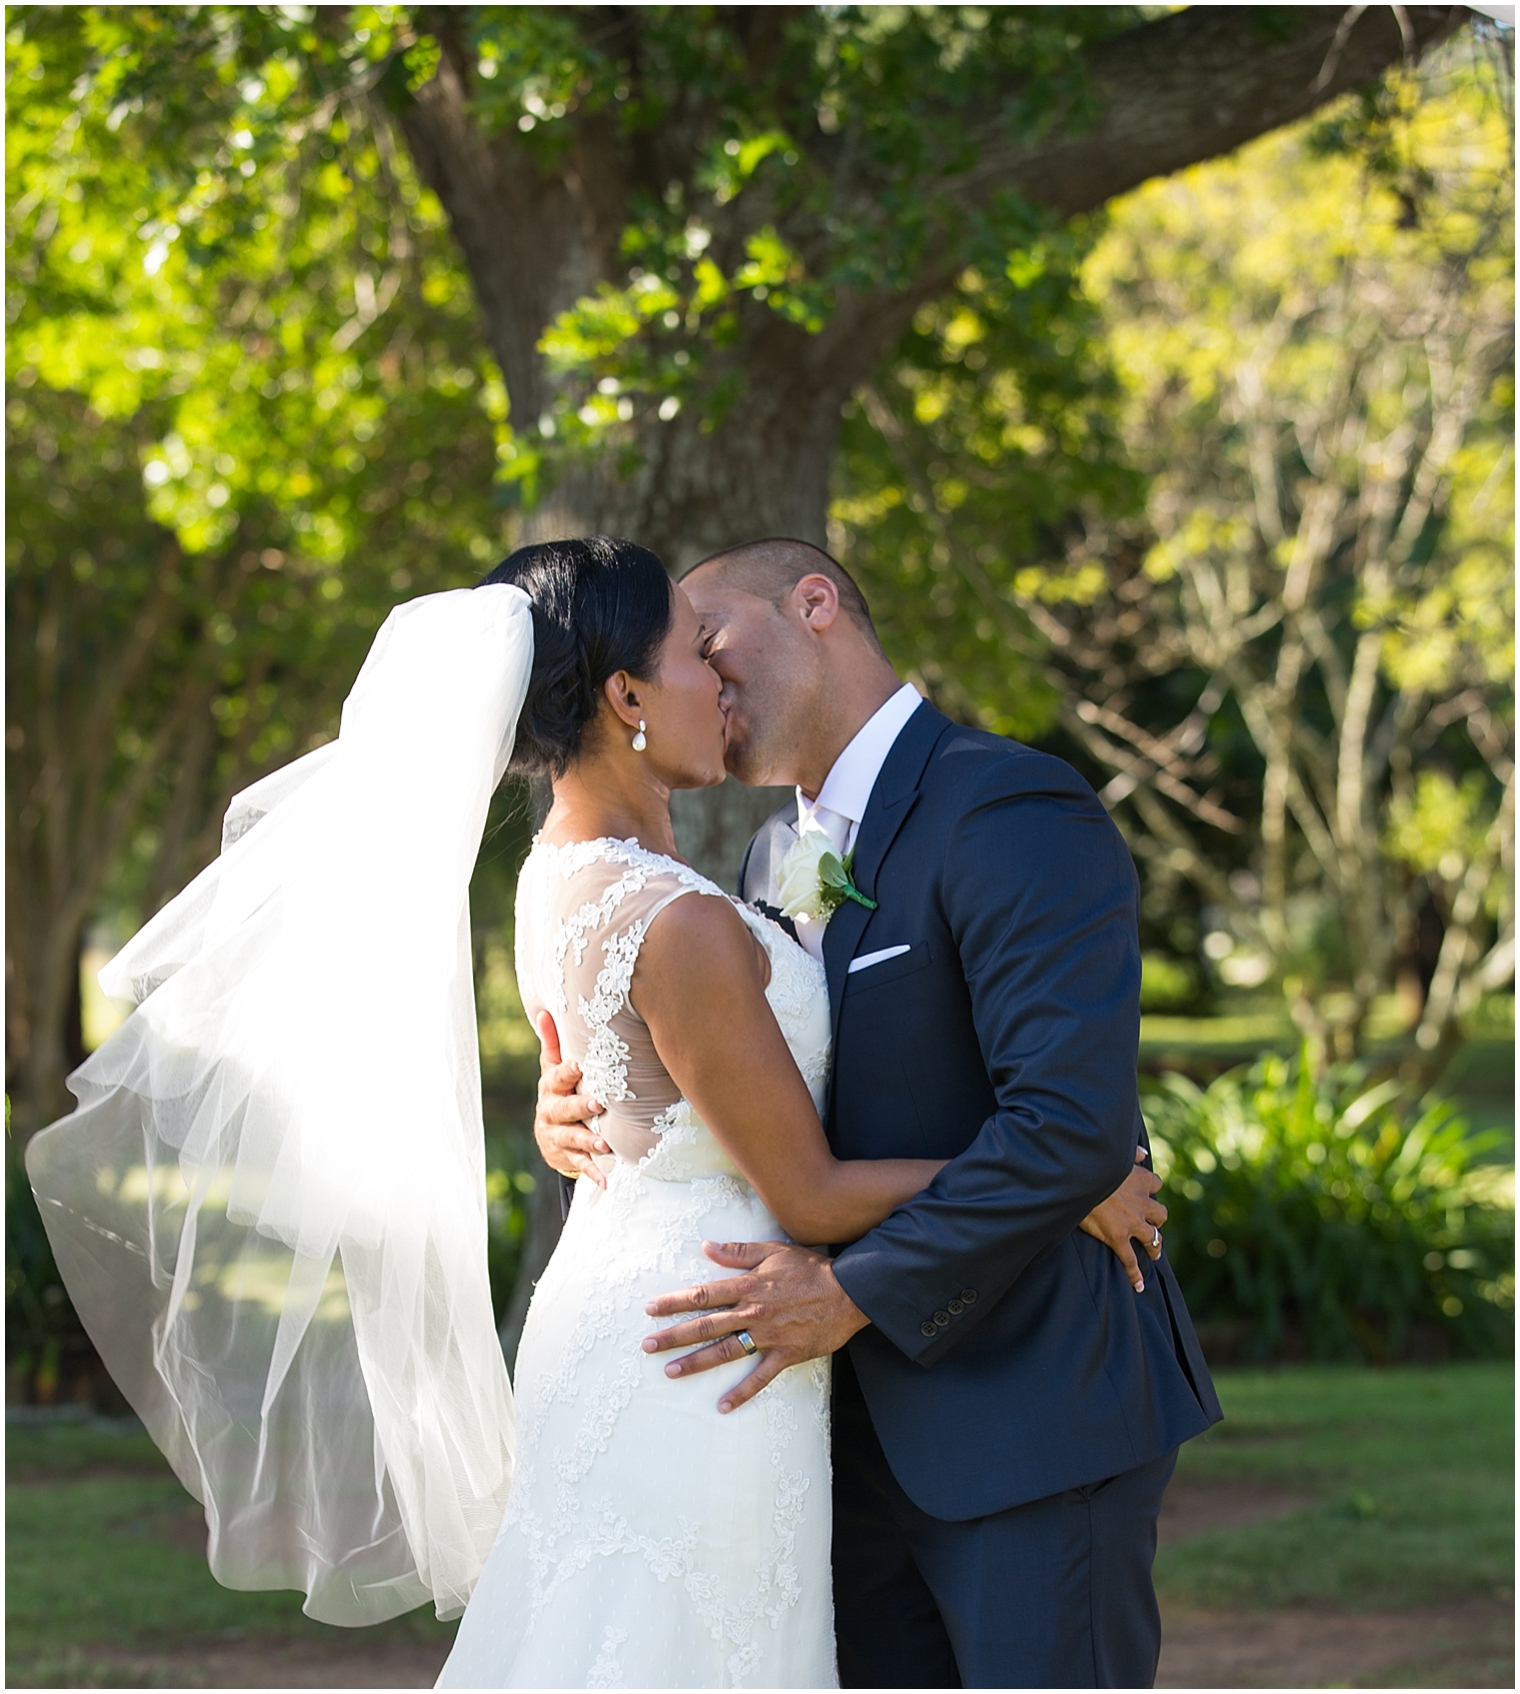 Sydney Wedding Photographer, The Kiss, Wedding Day Kiss